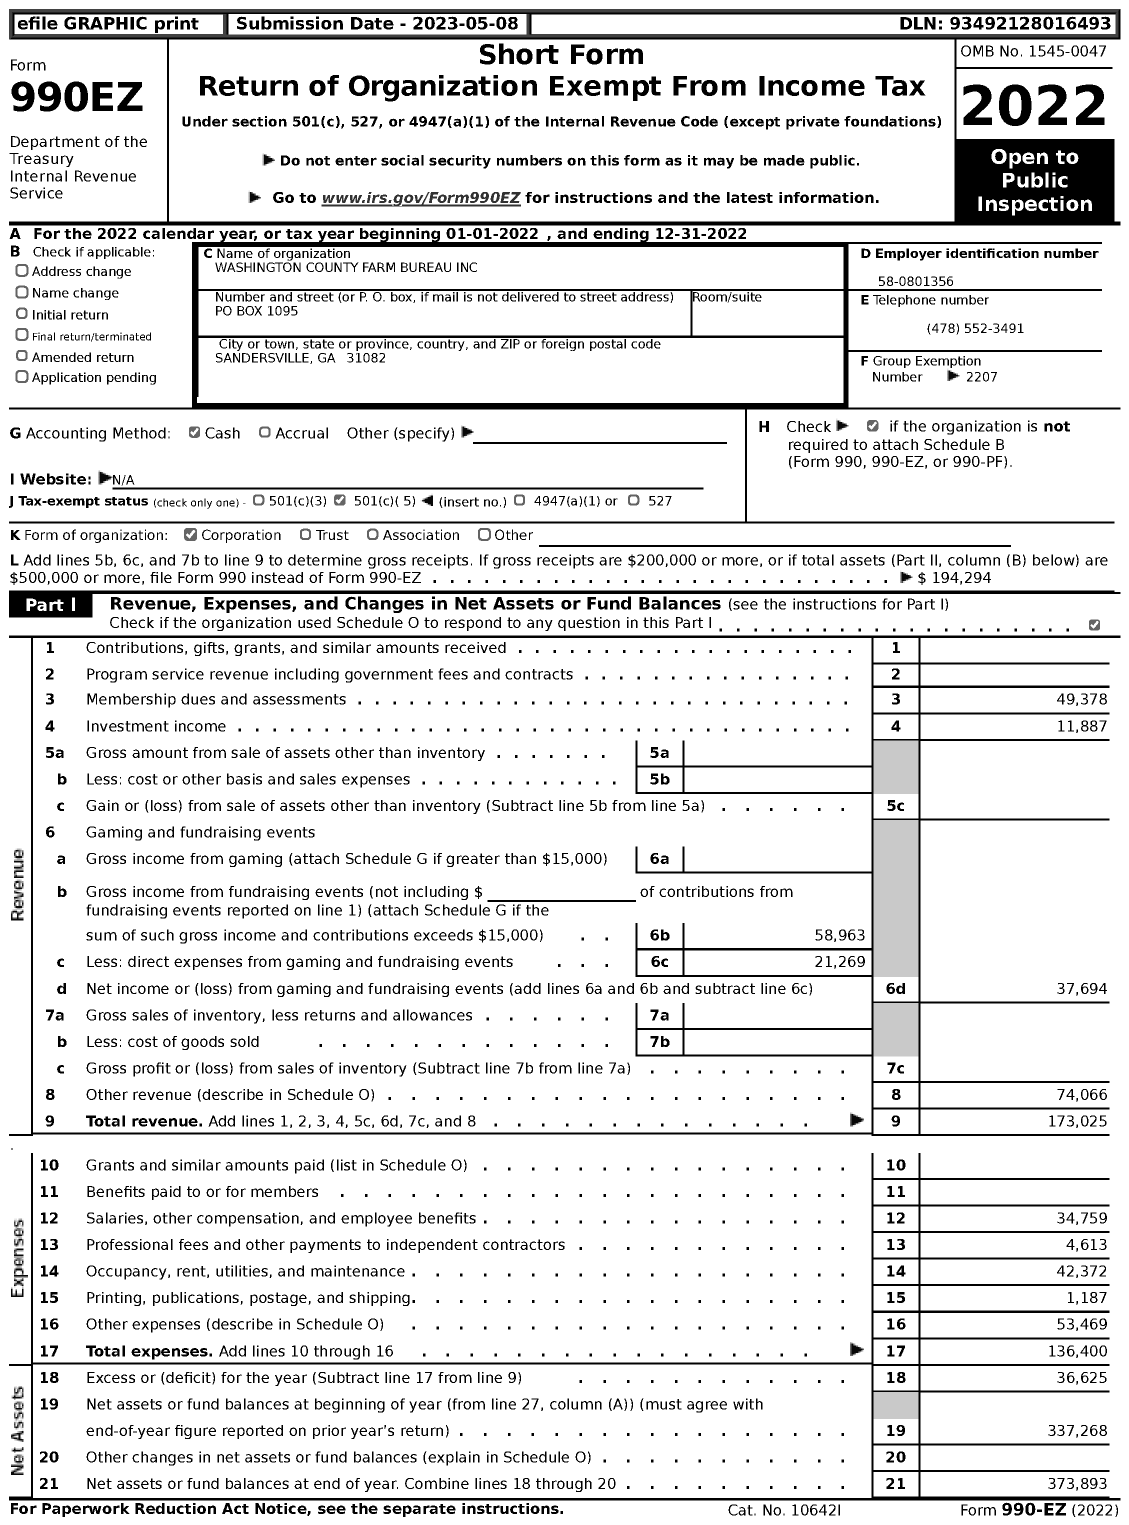 Image of first page of 2022 Form 990EZ for Georgia Farm Bureau Federation - Washington County Farm Bureau